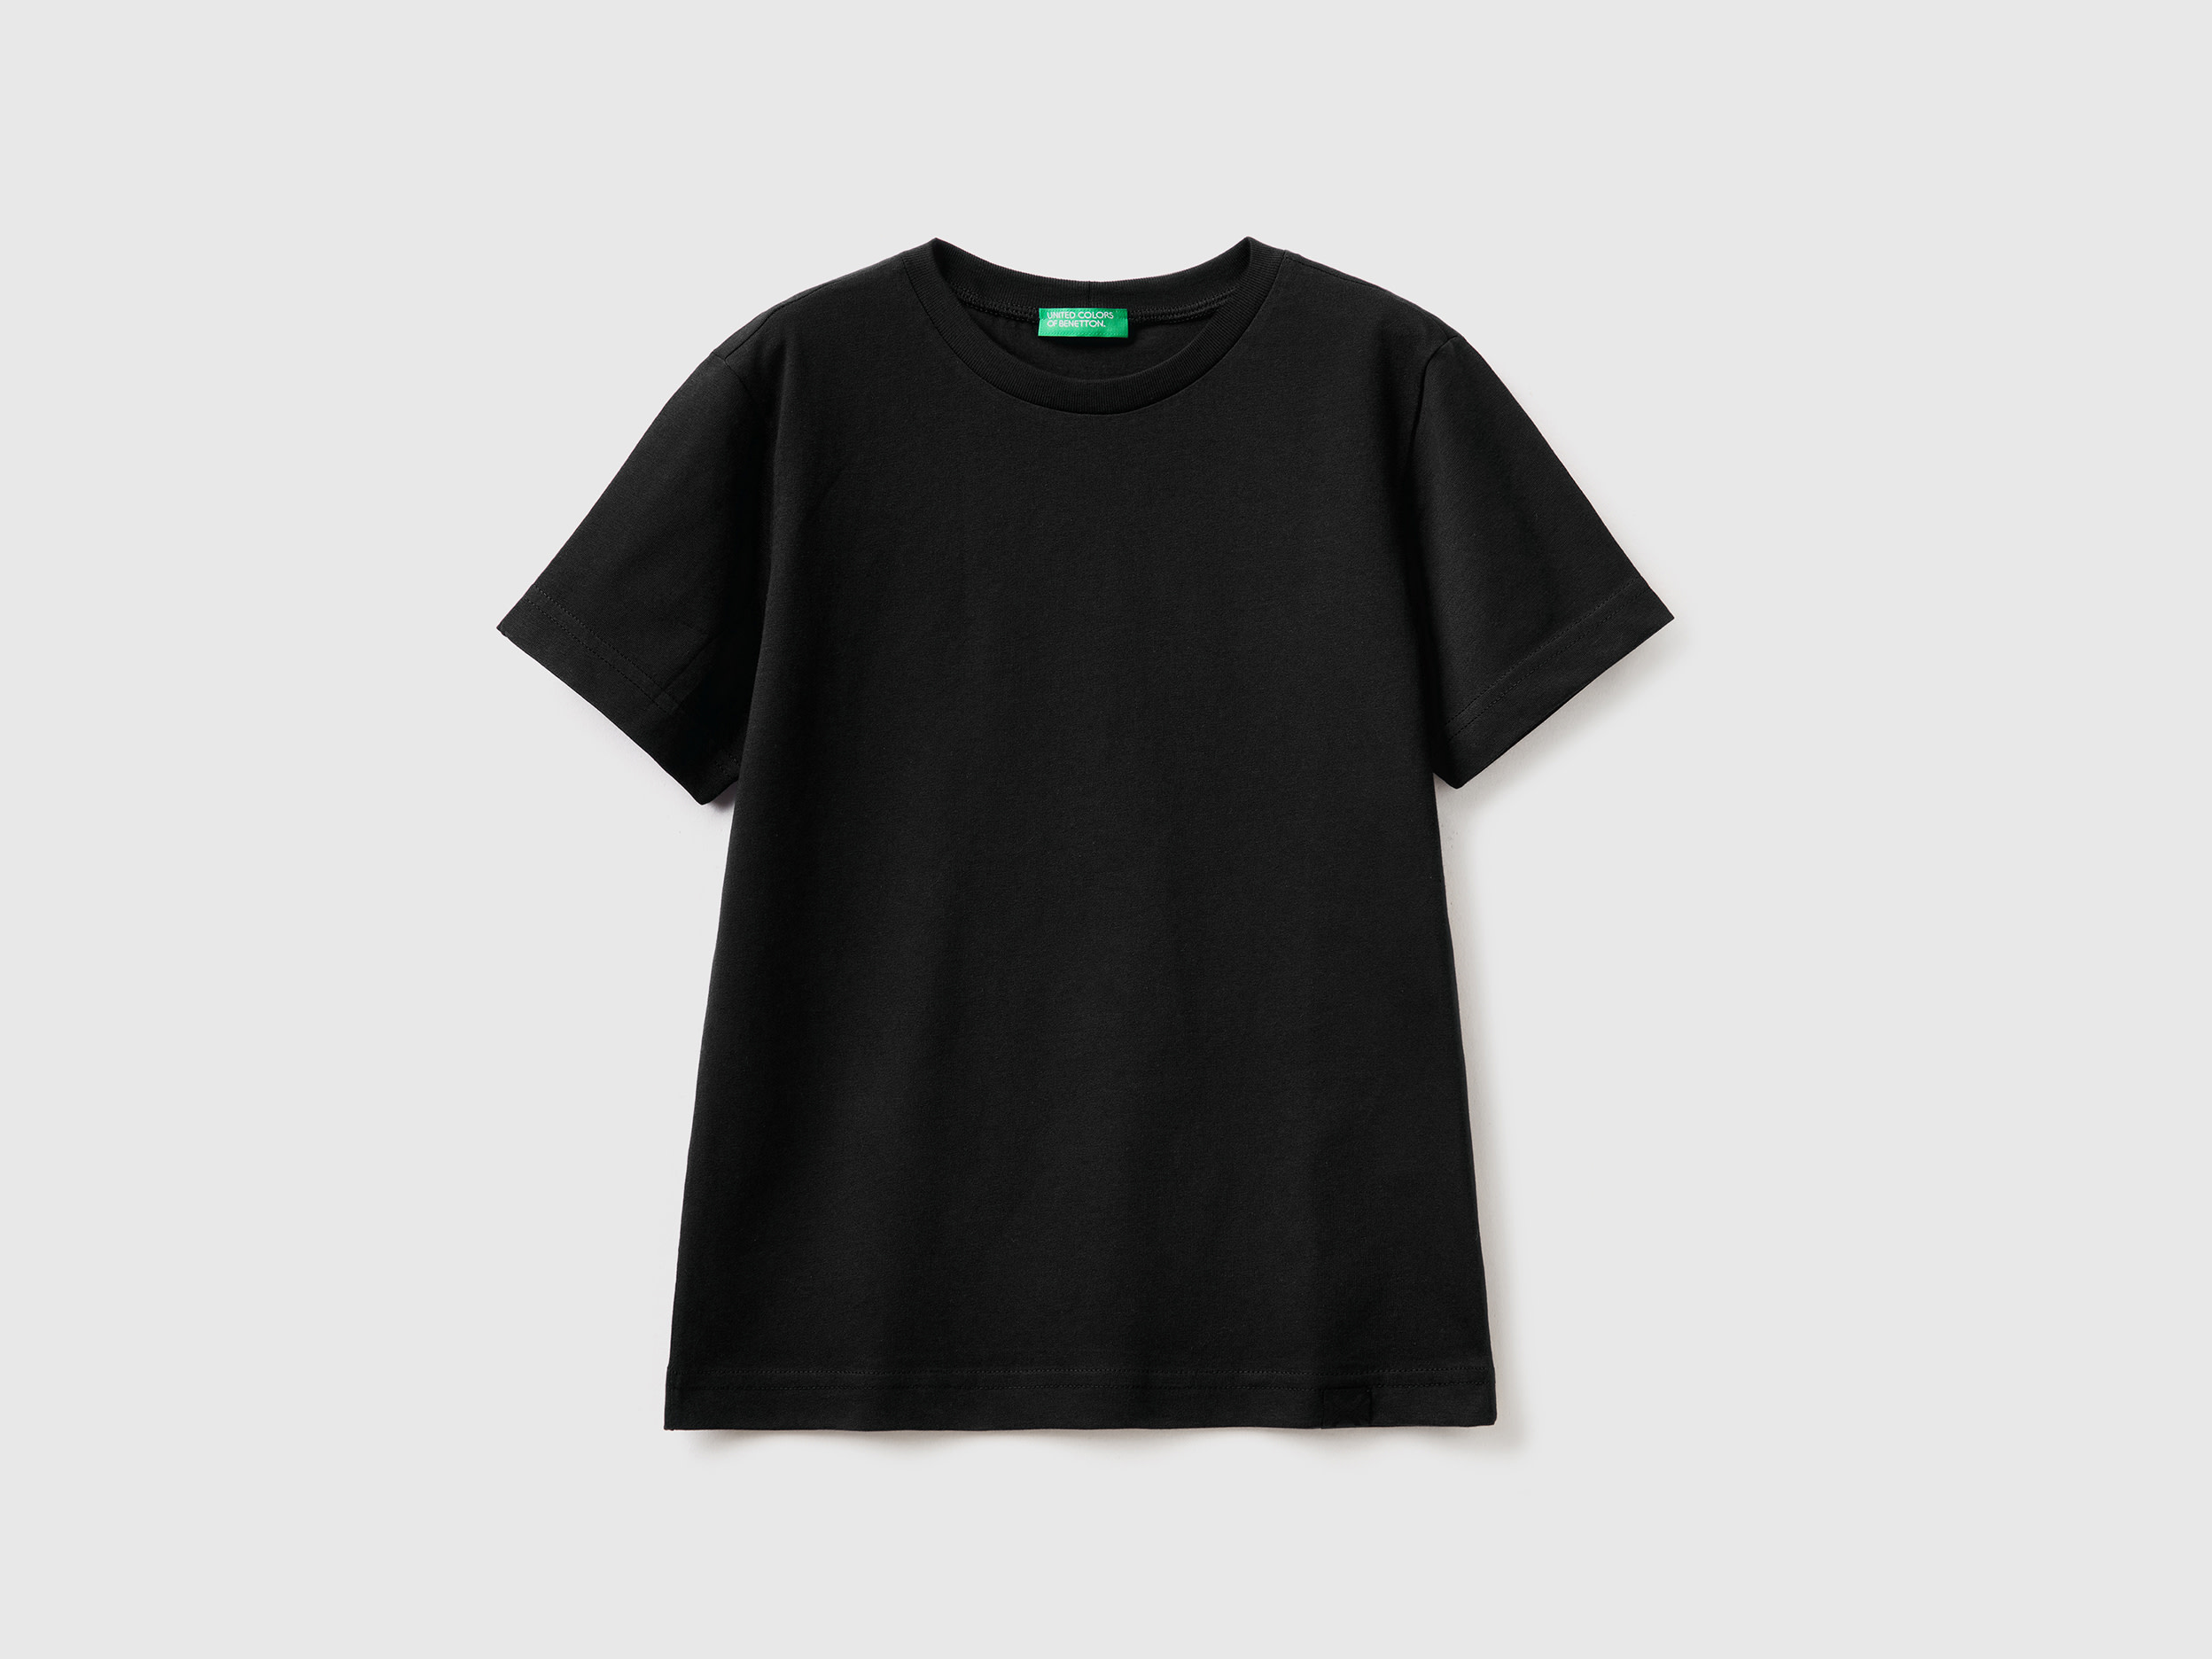 Benetton, Organic Cotton T-shirt, size 3XL, Black, Kids